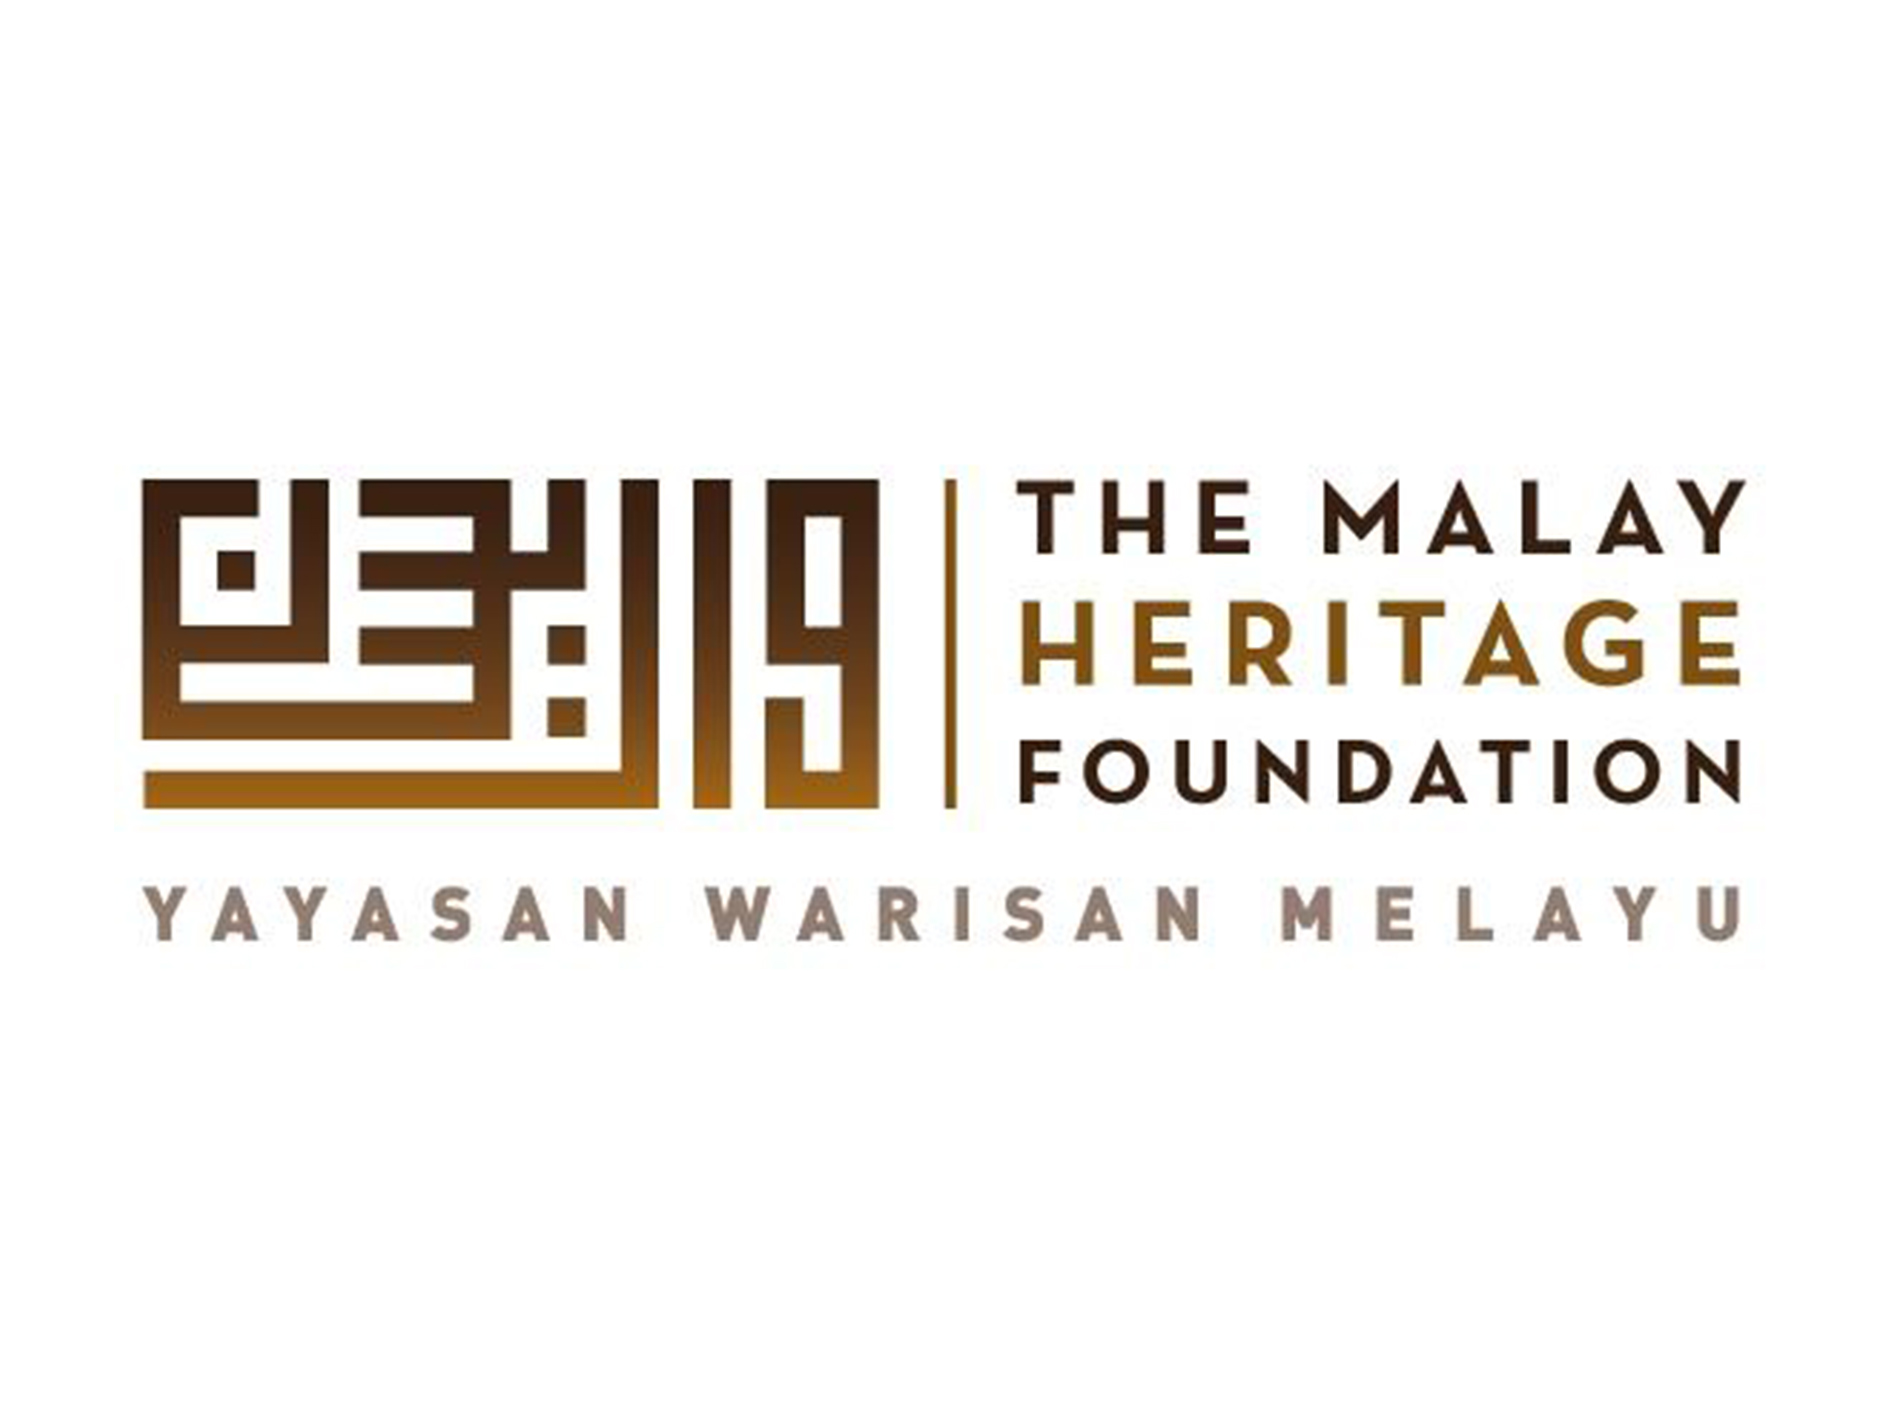 The Malay Heritage Foundation logo